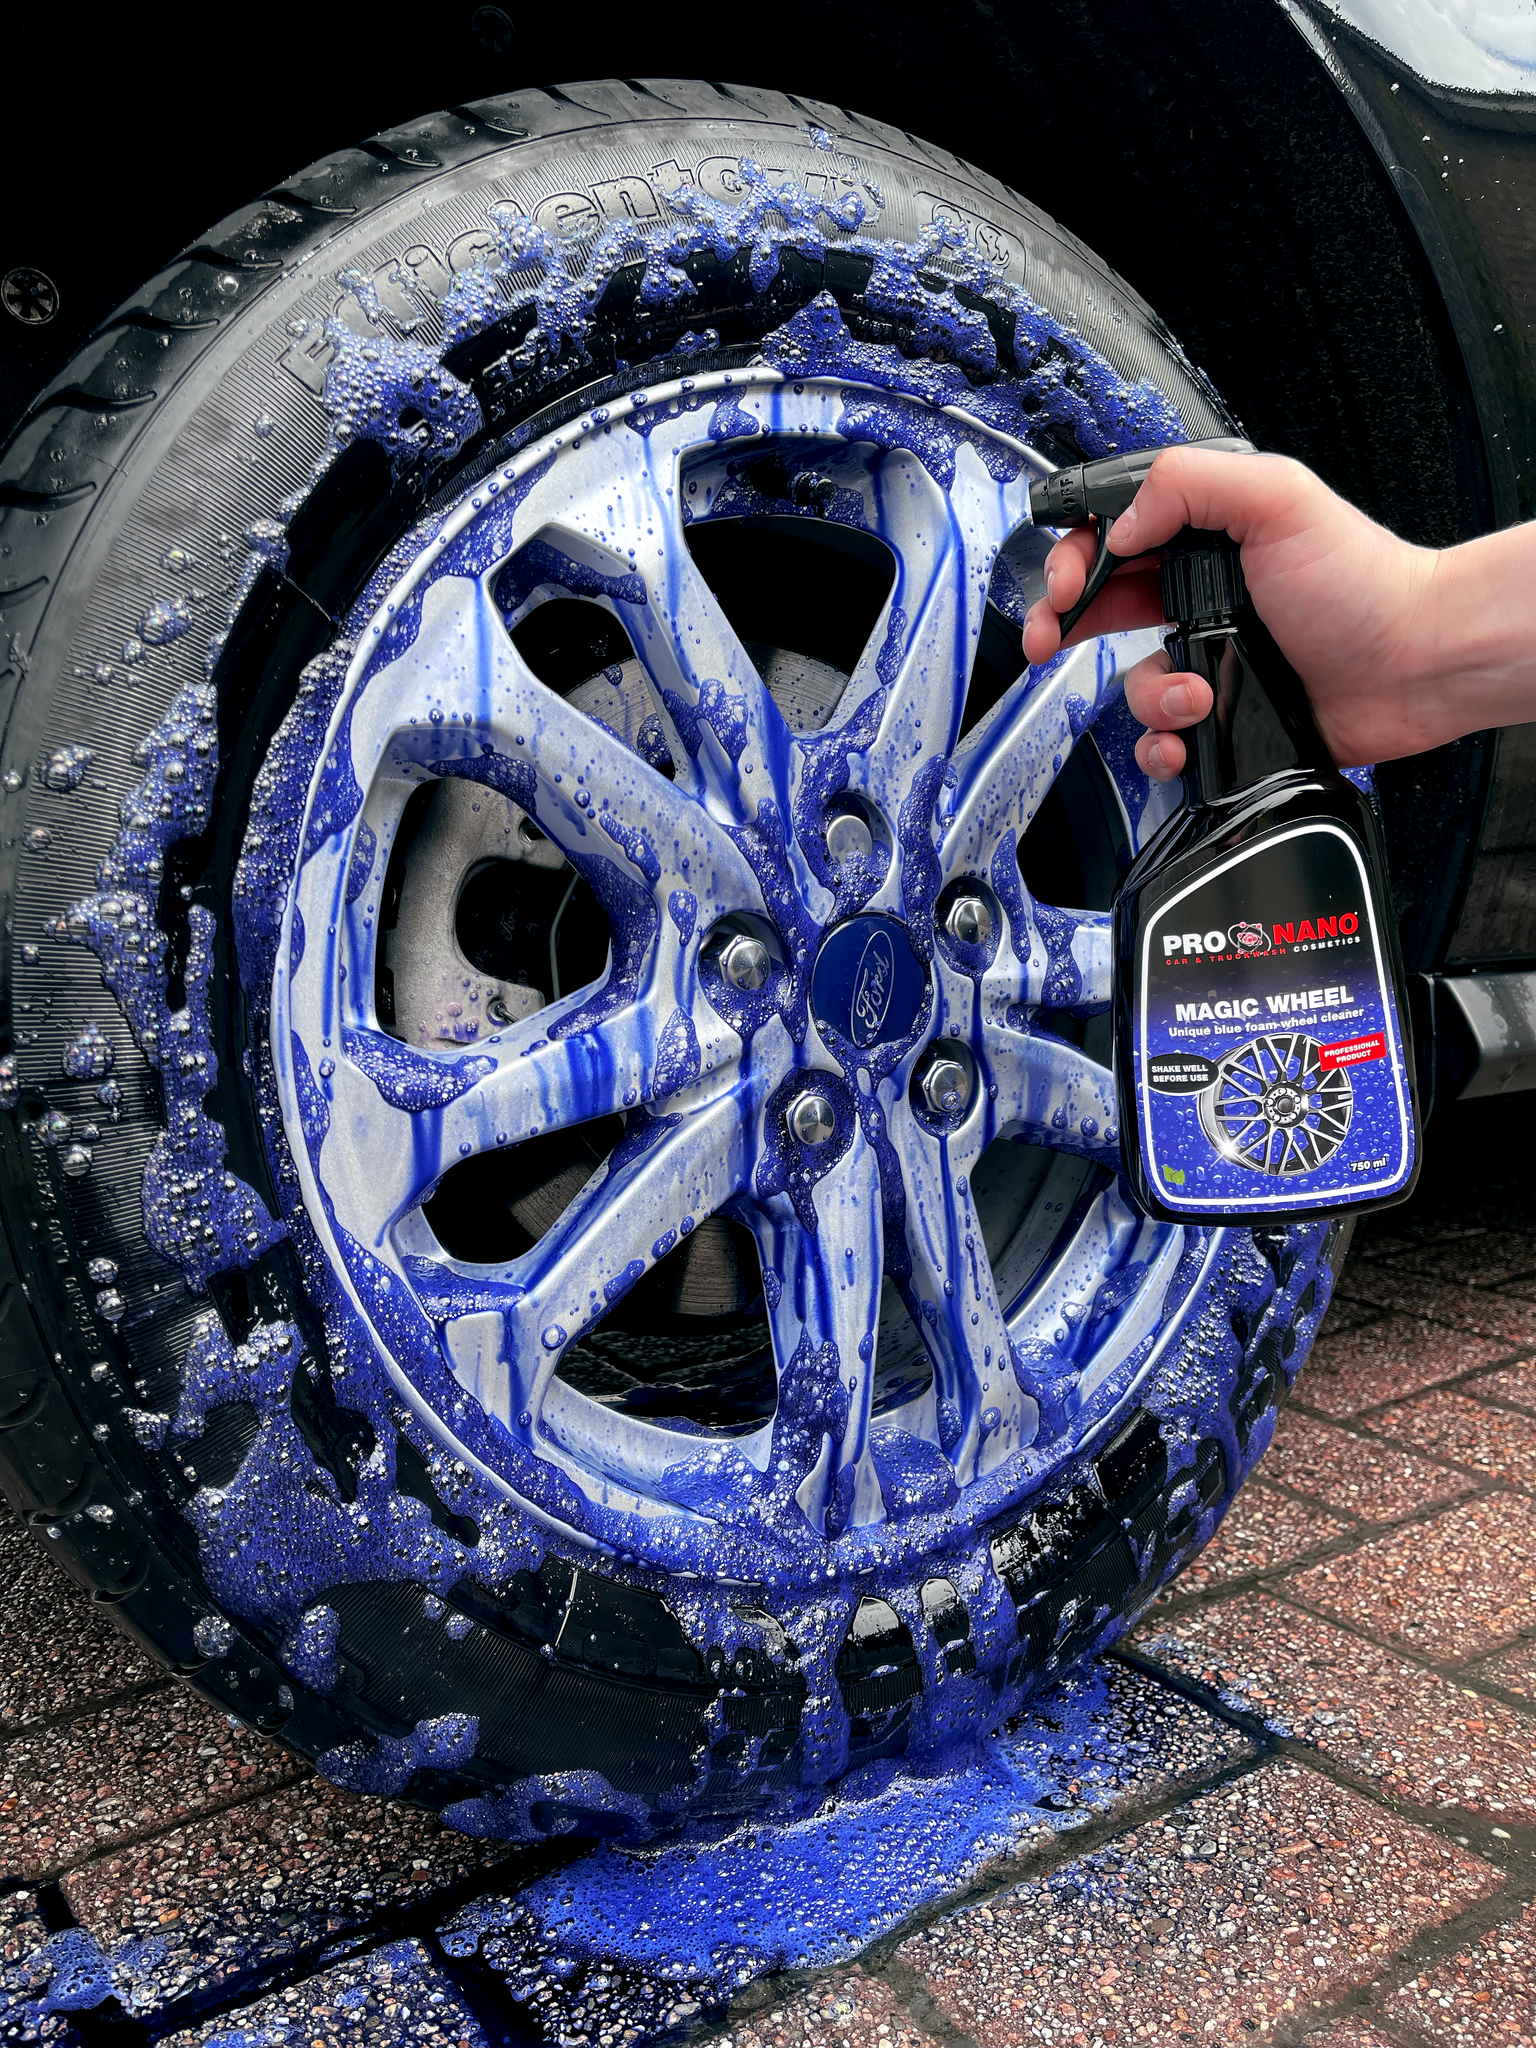 Cleaning rims, ProNano Magic Wheel Blue